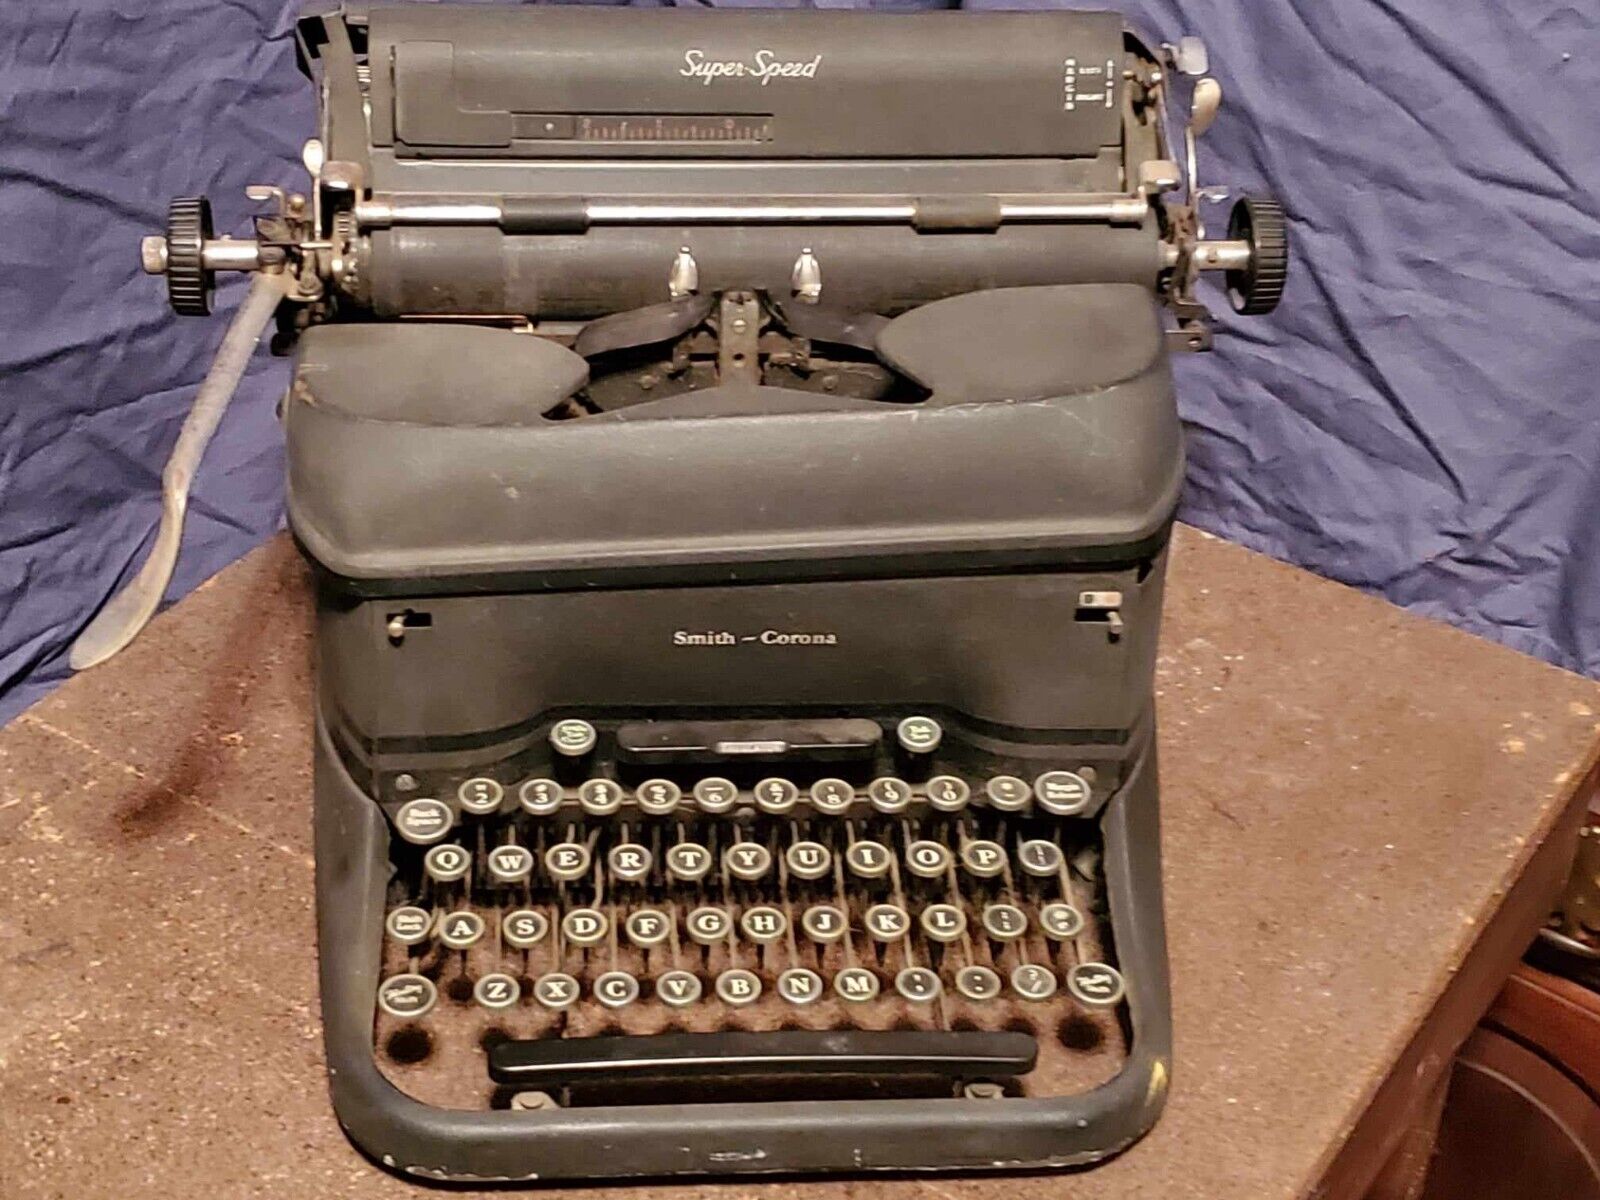 VINTAGE TYPEWRITER - Smith-Corona Super Speed Typewriter - Used - Needs love